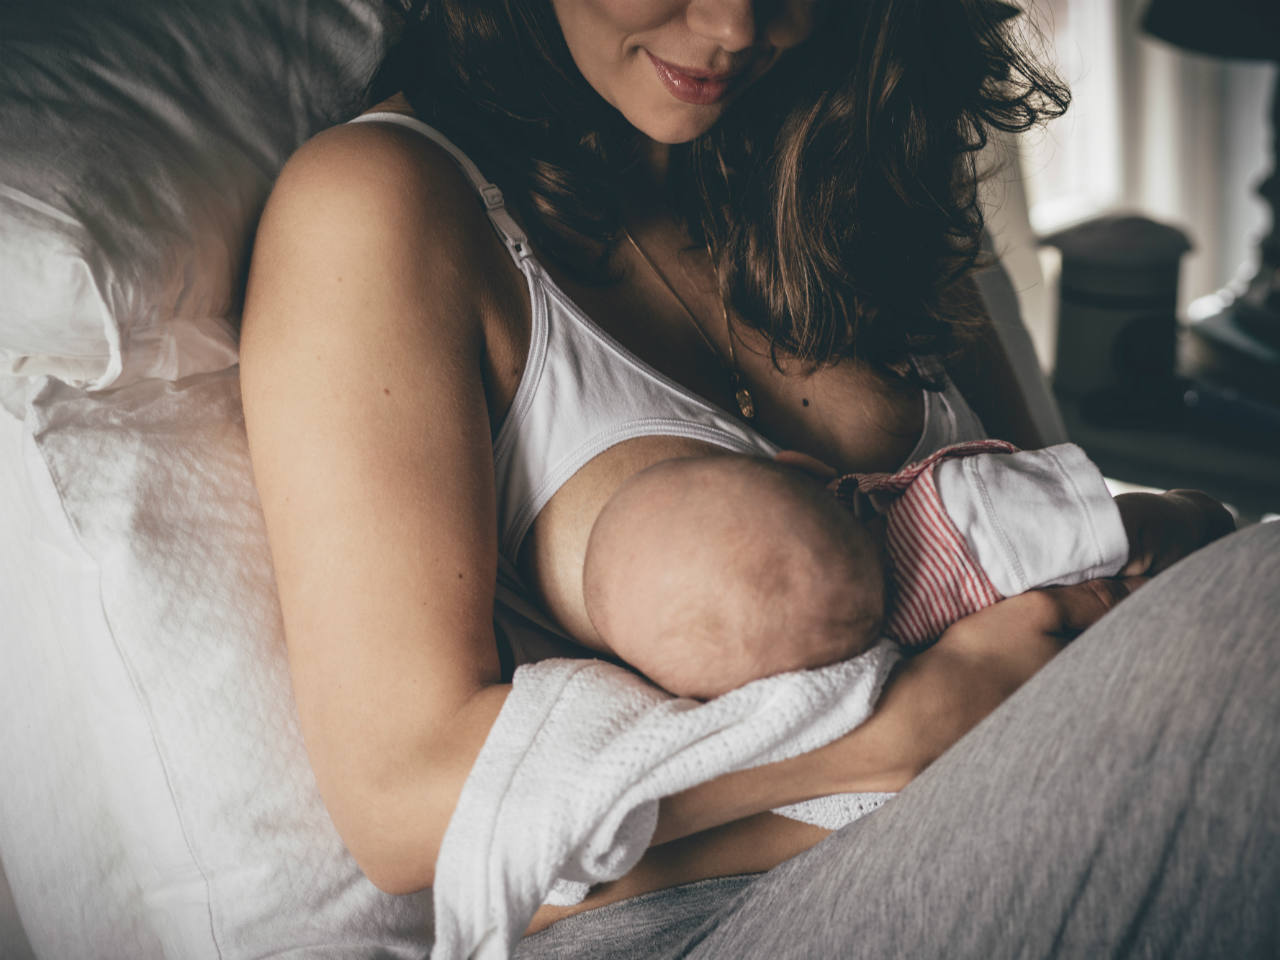 A woman in a nursing bra breastfeeding her baby in bed